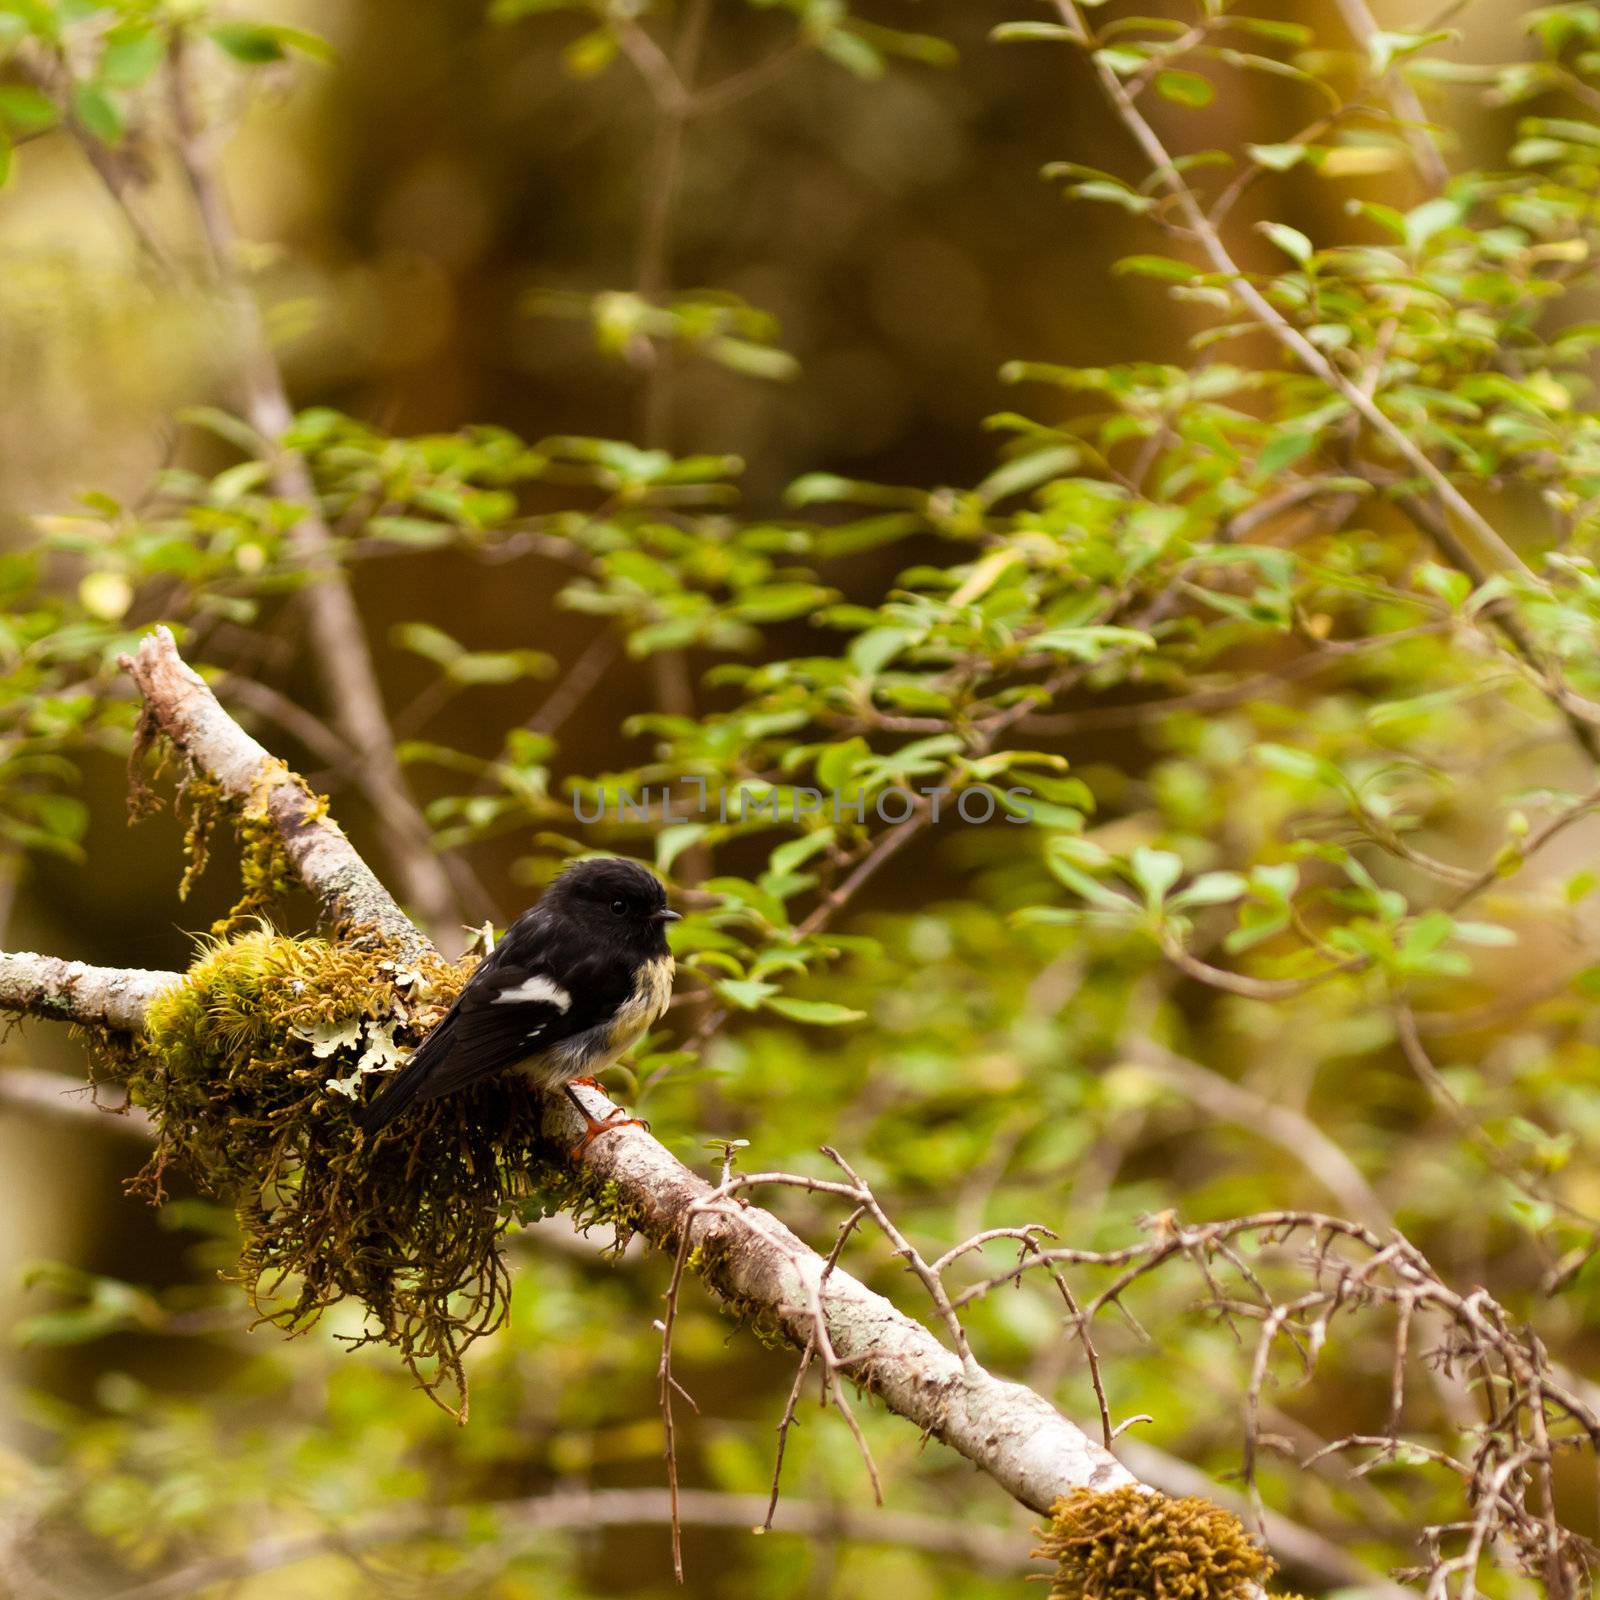 Endemic NZ bird Tomtit, Petroica macrocephala by PiLens